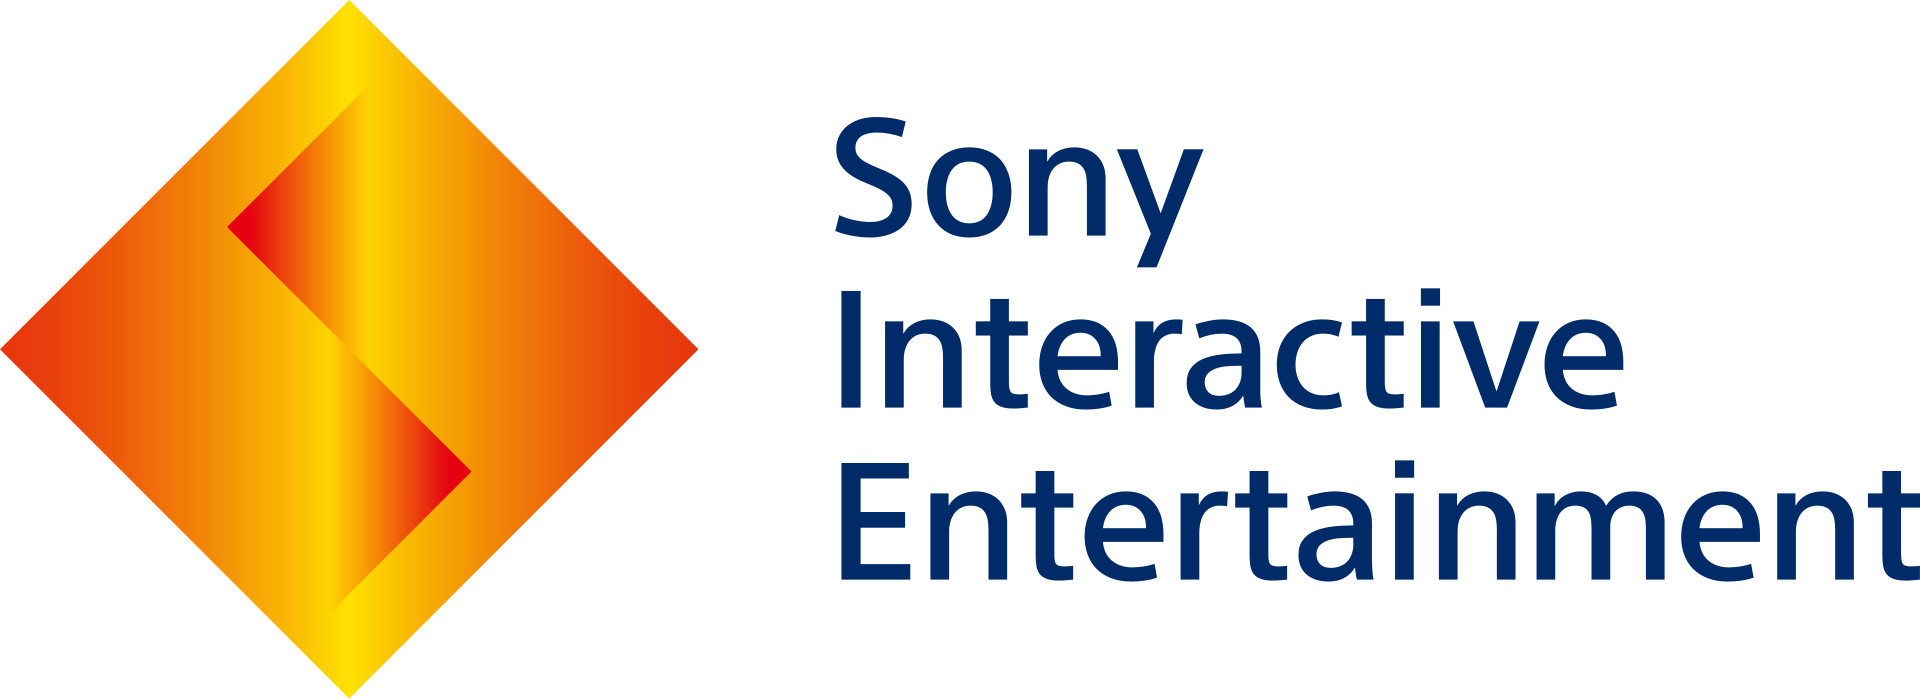 Sony Interactive Entertainment - Sony Computer Entertainment